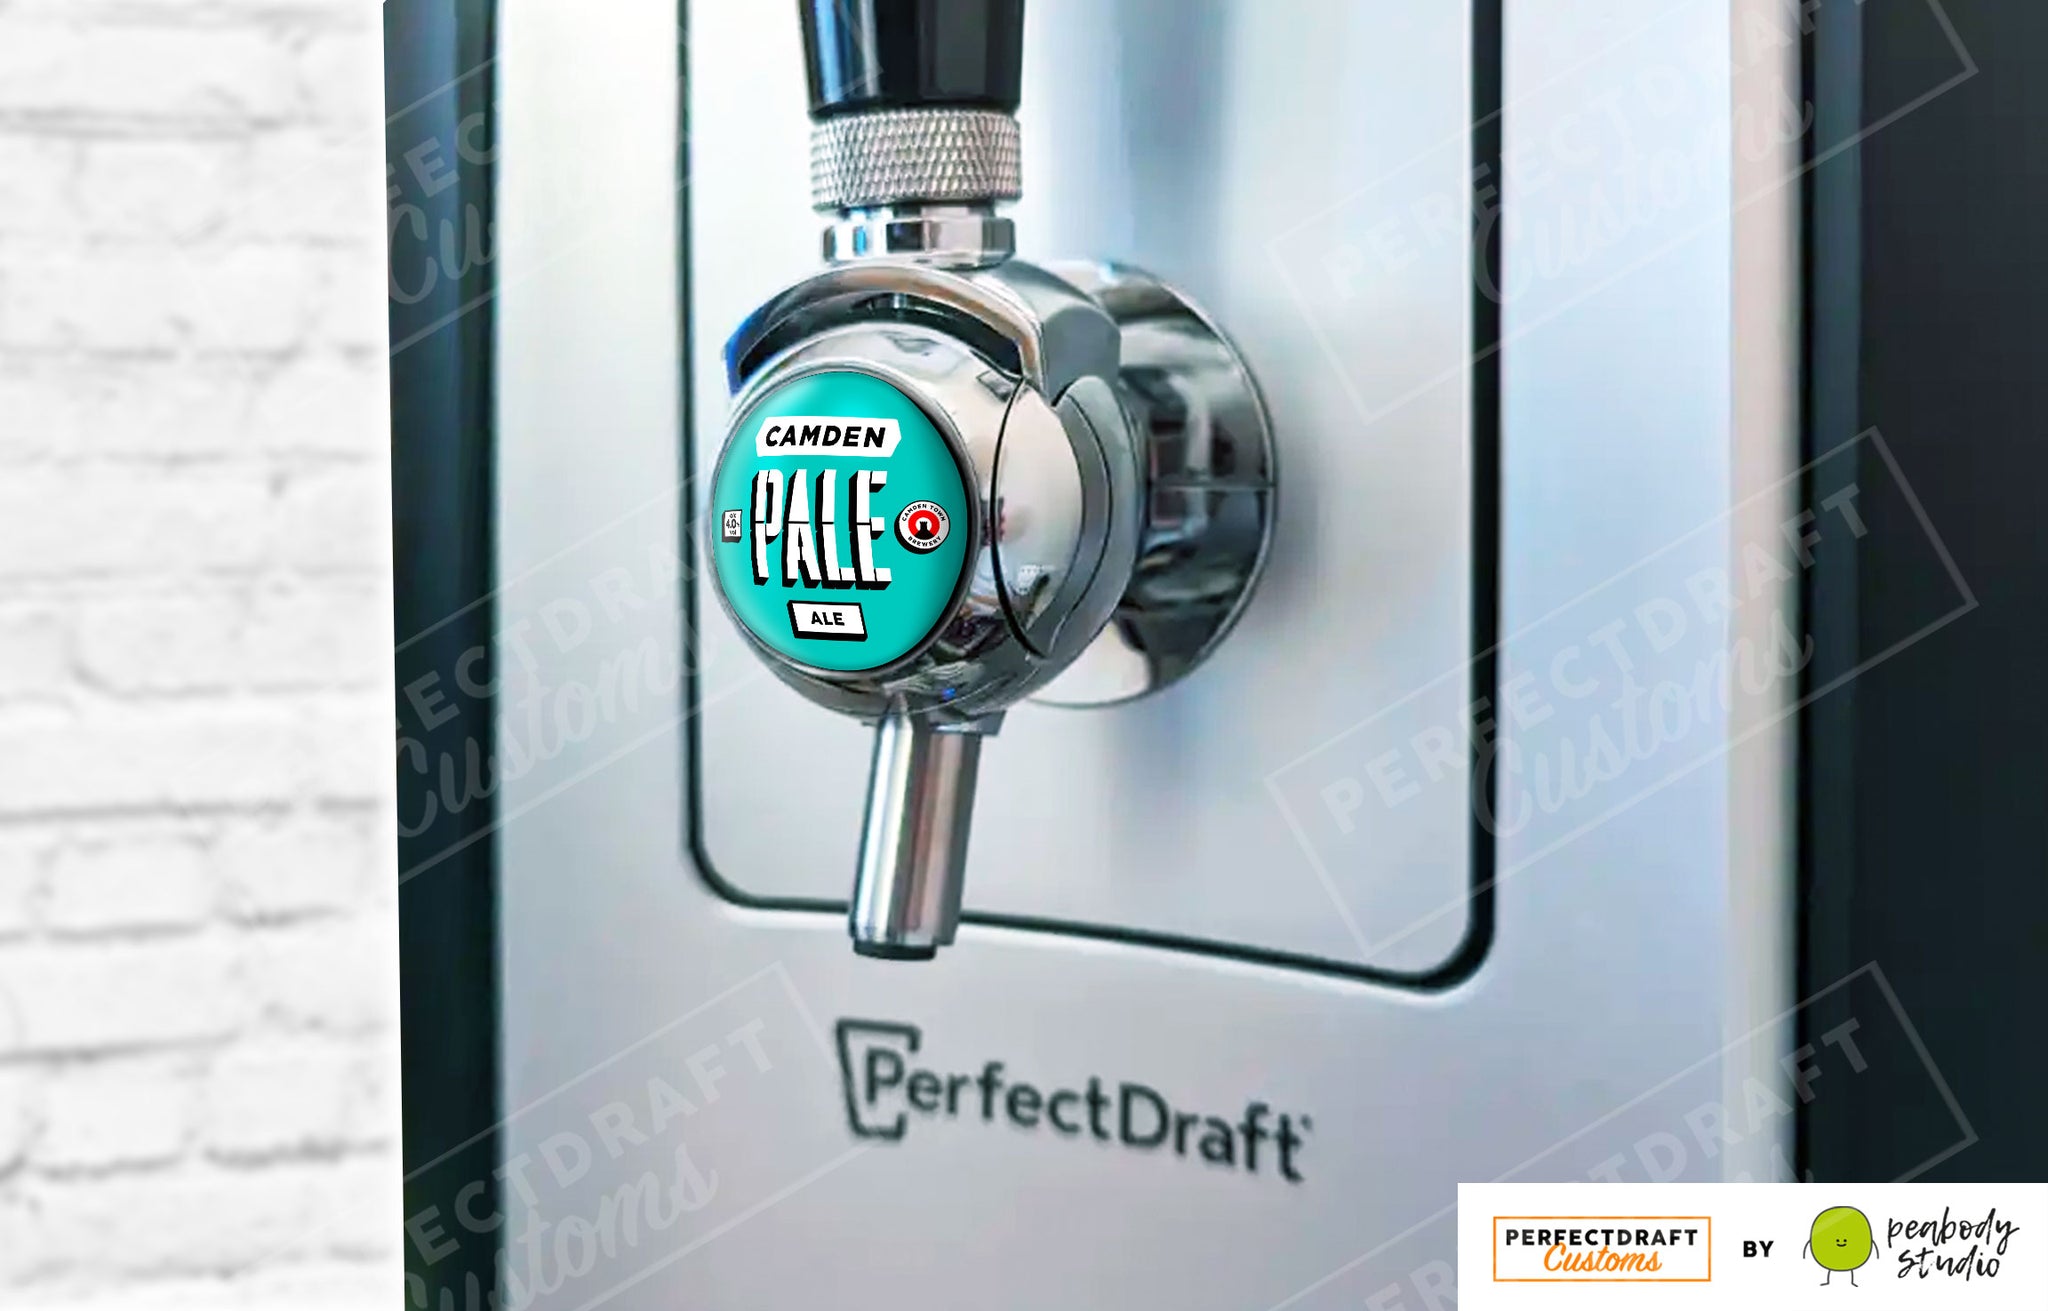 Camden Pale Ale Perfect Draft Pro Medallion